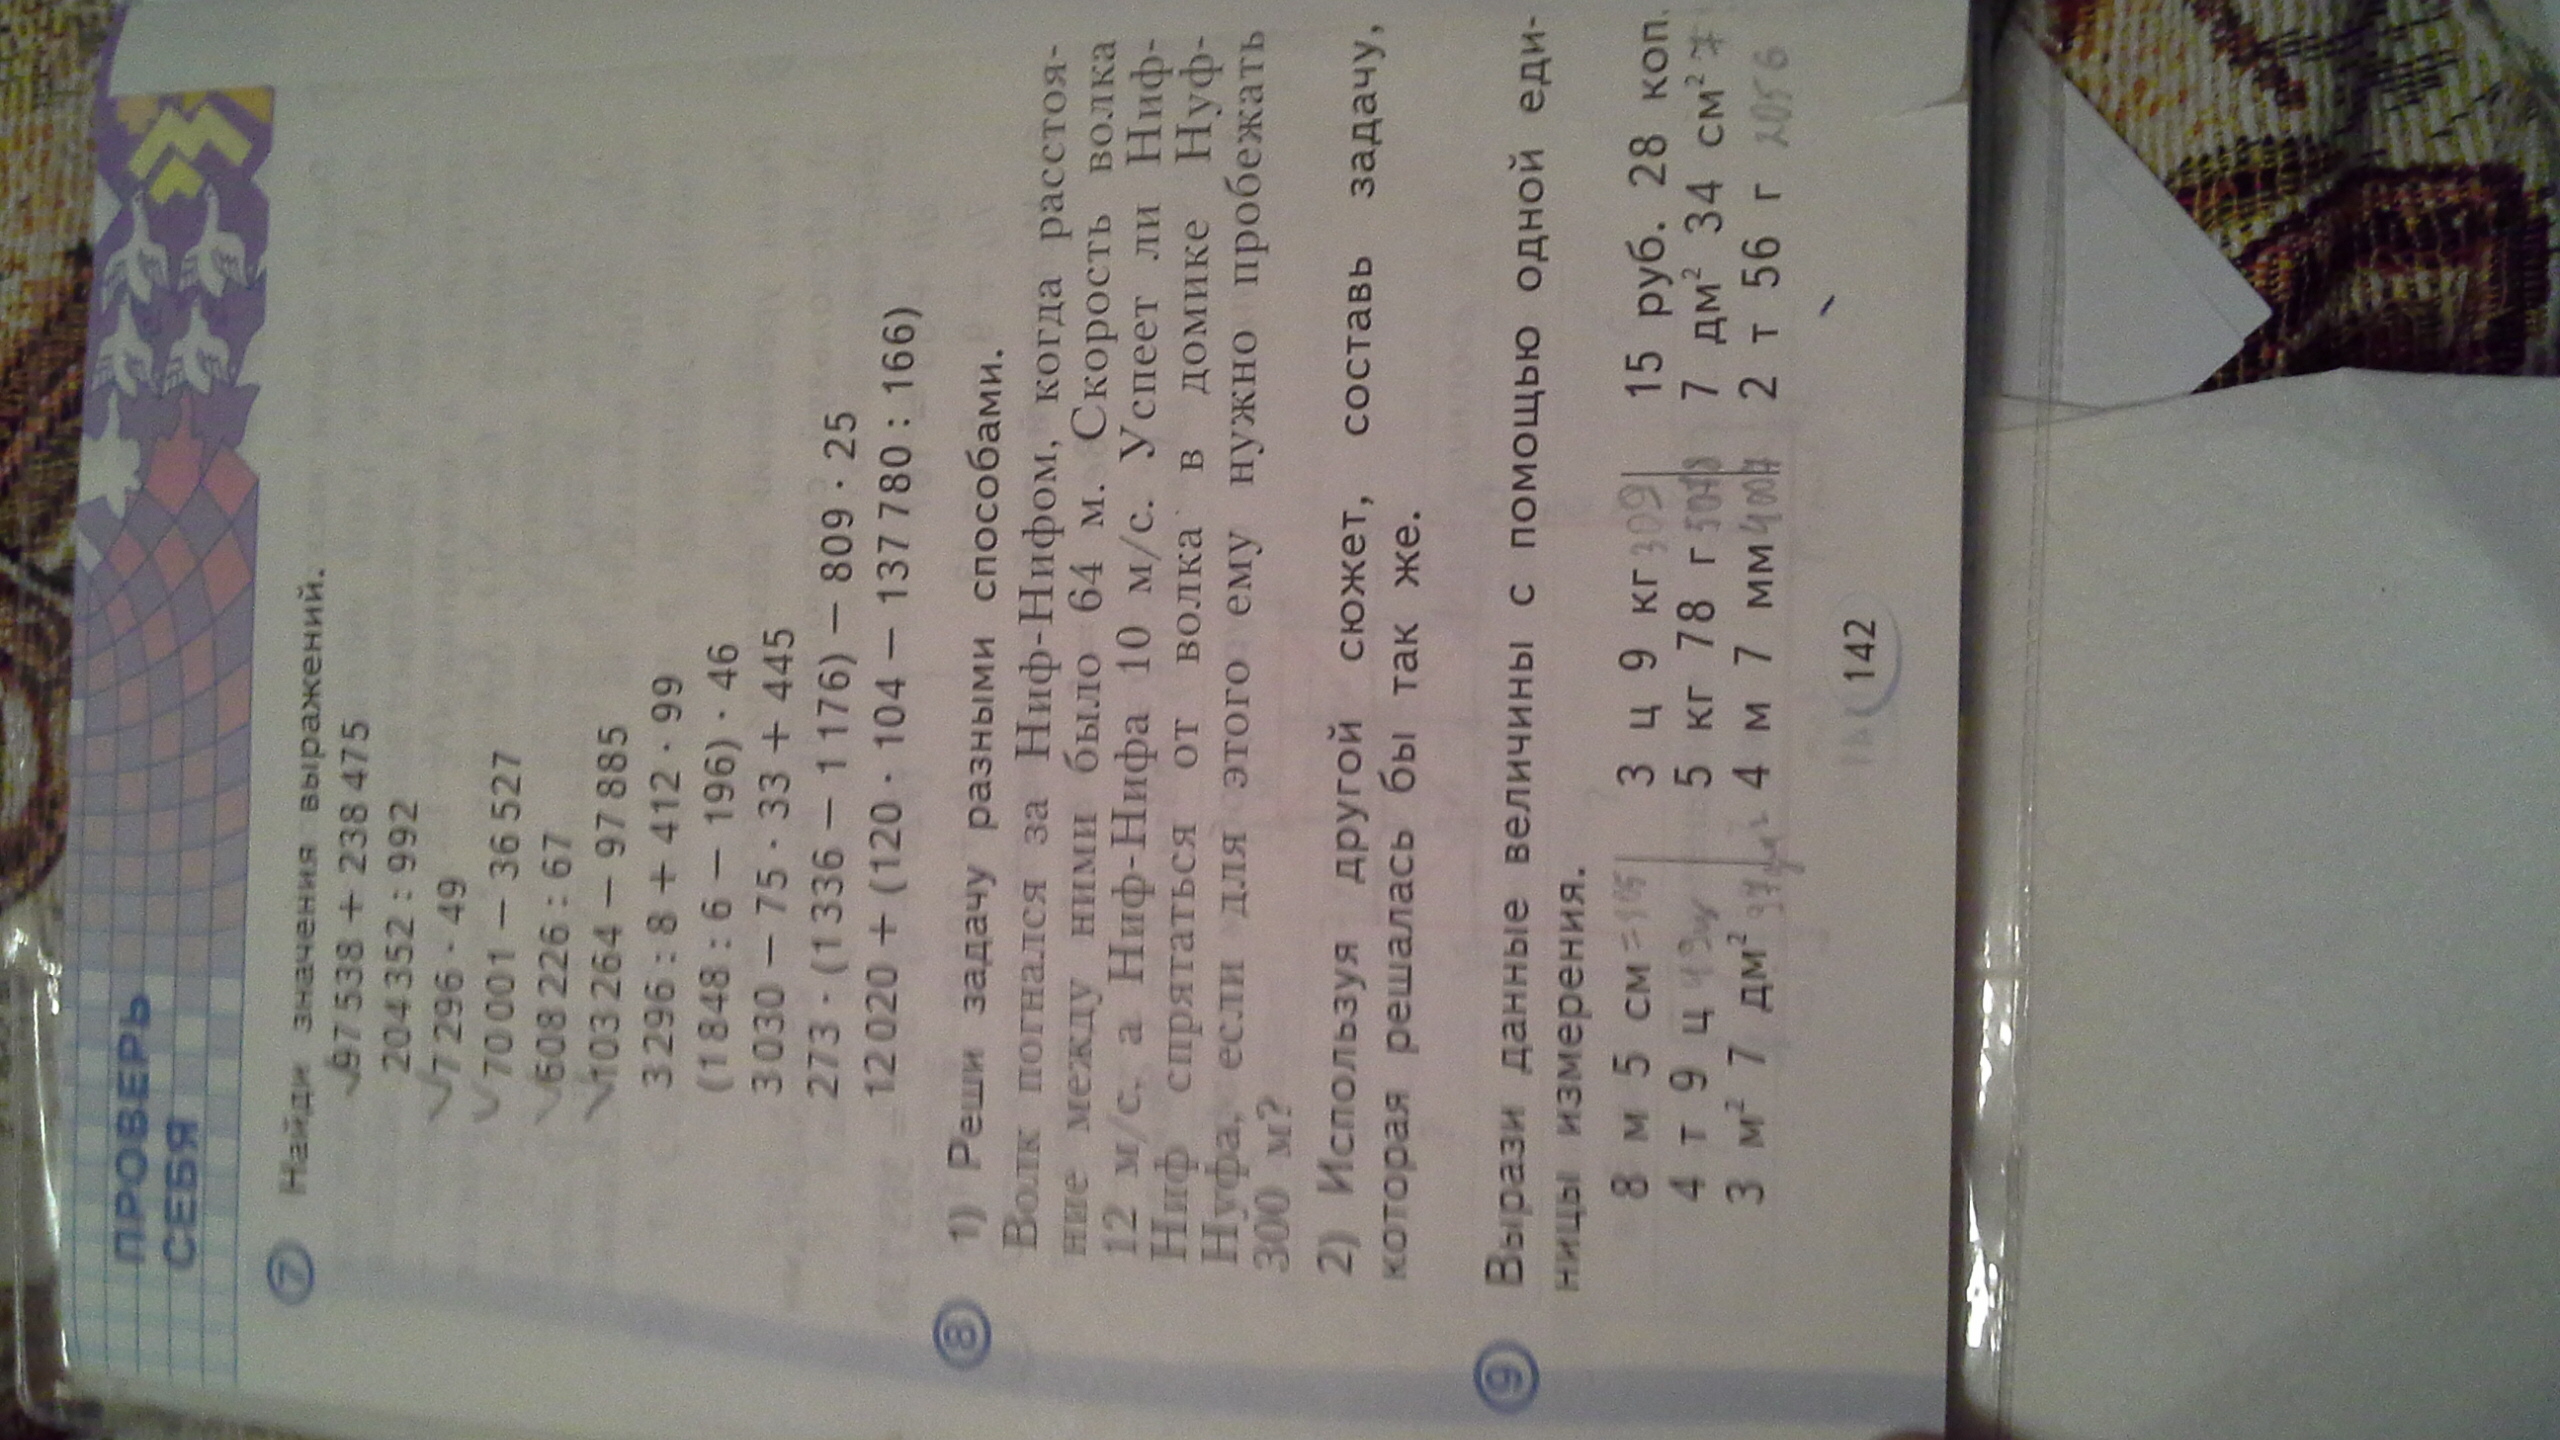 Математика третий класс страница 62 номер